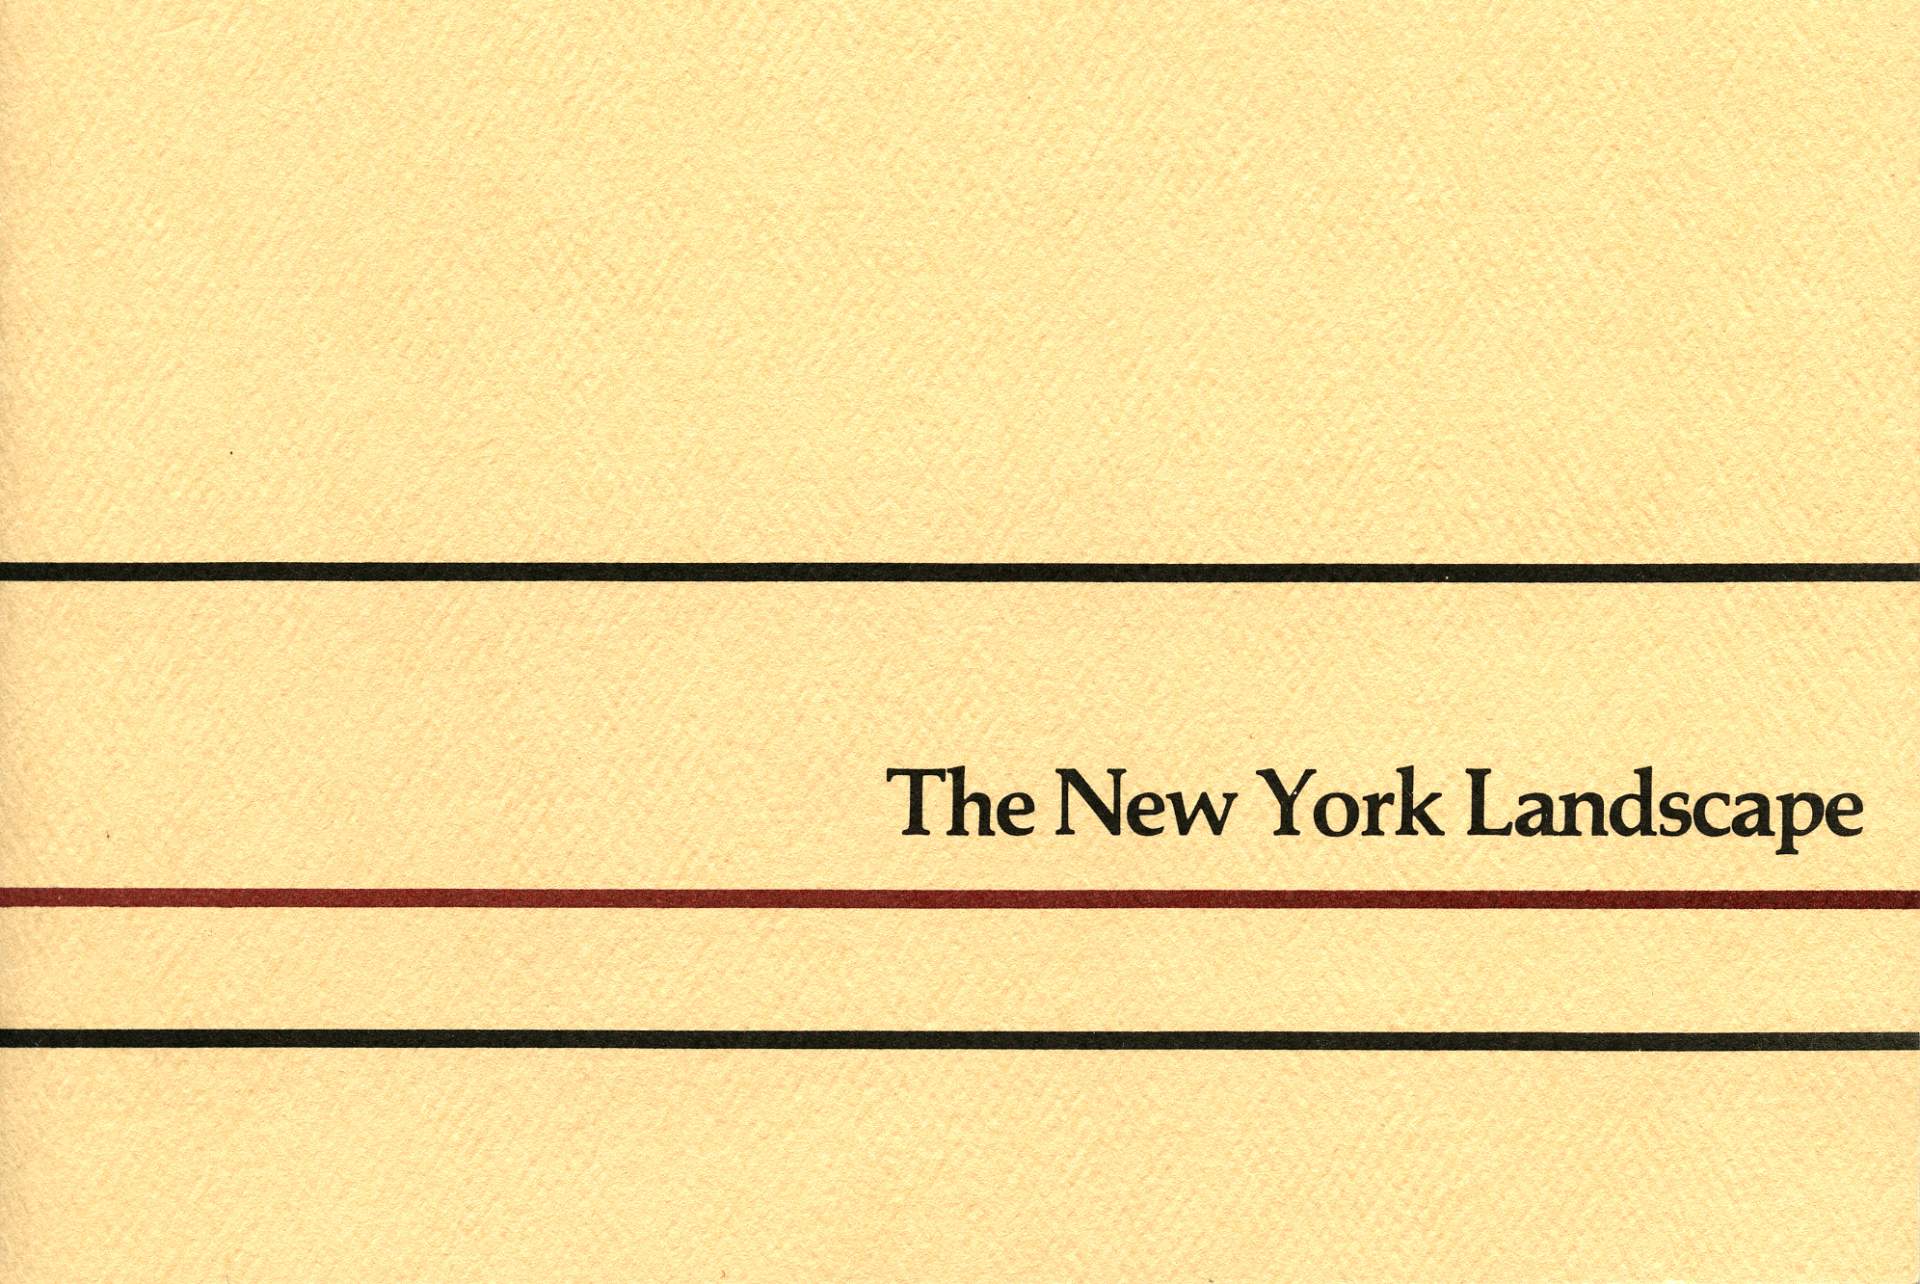 The New York Landscape exhibition program cover